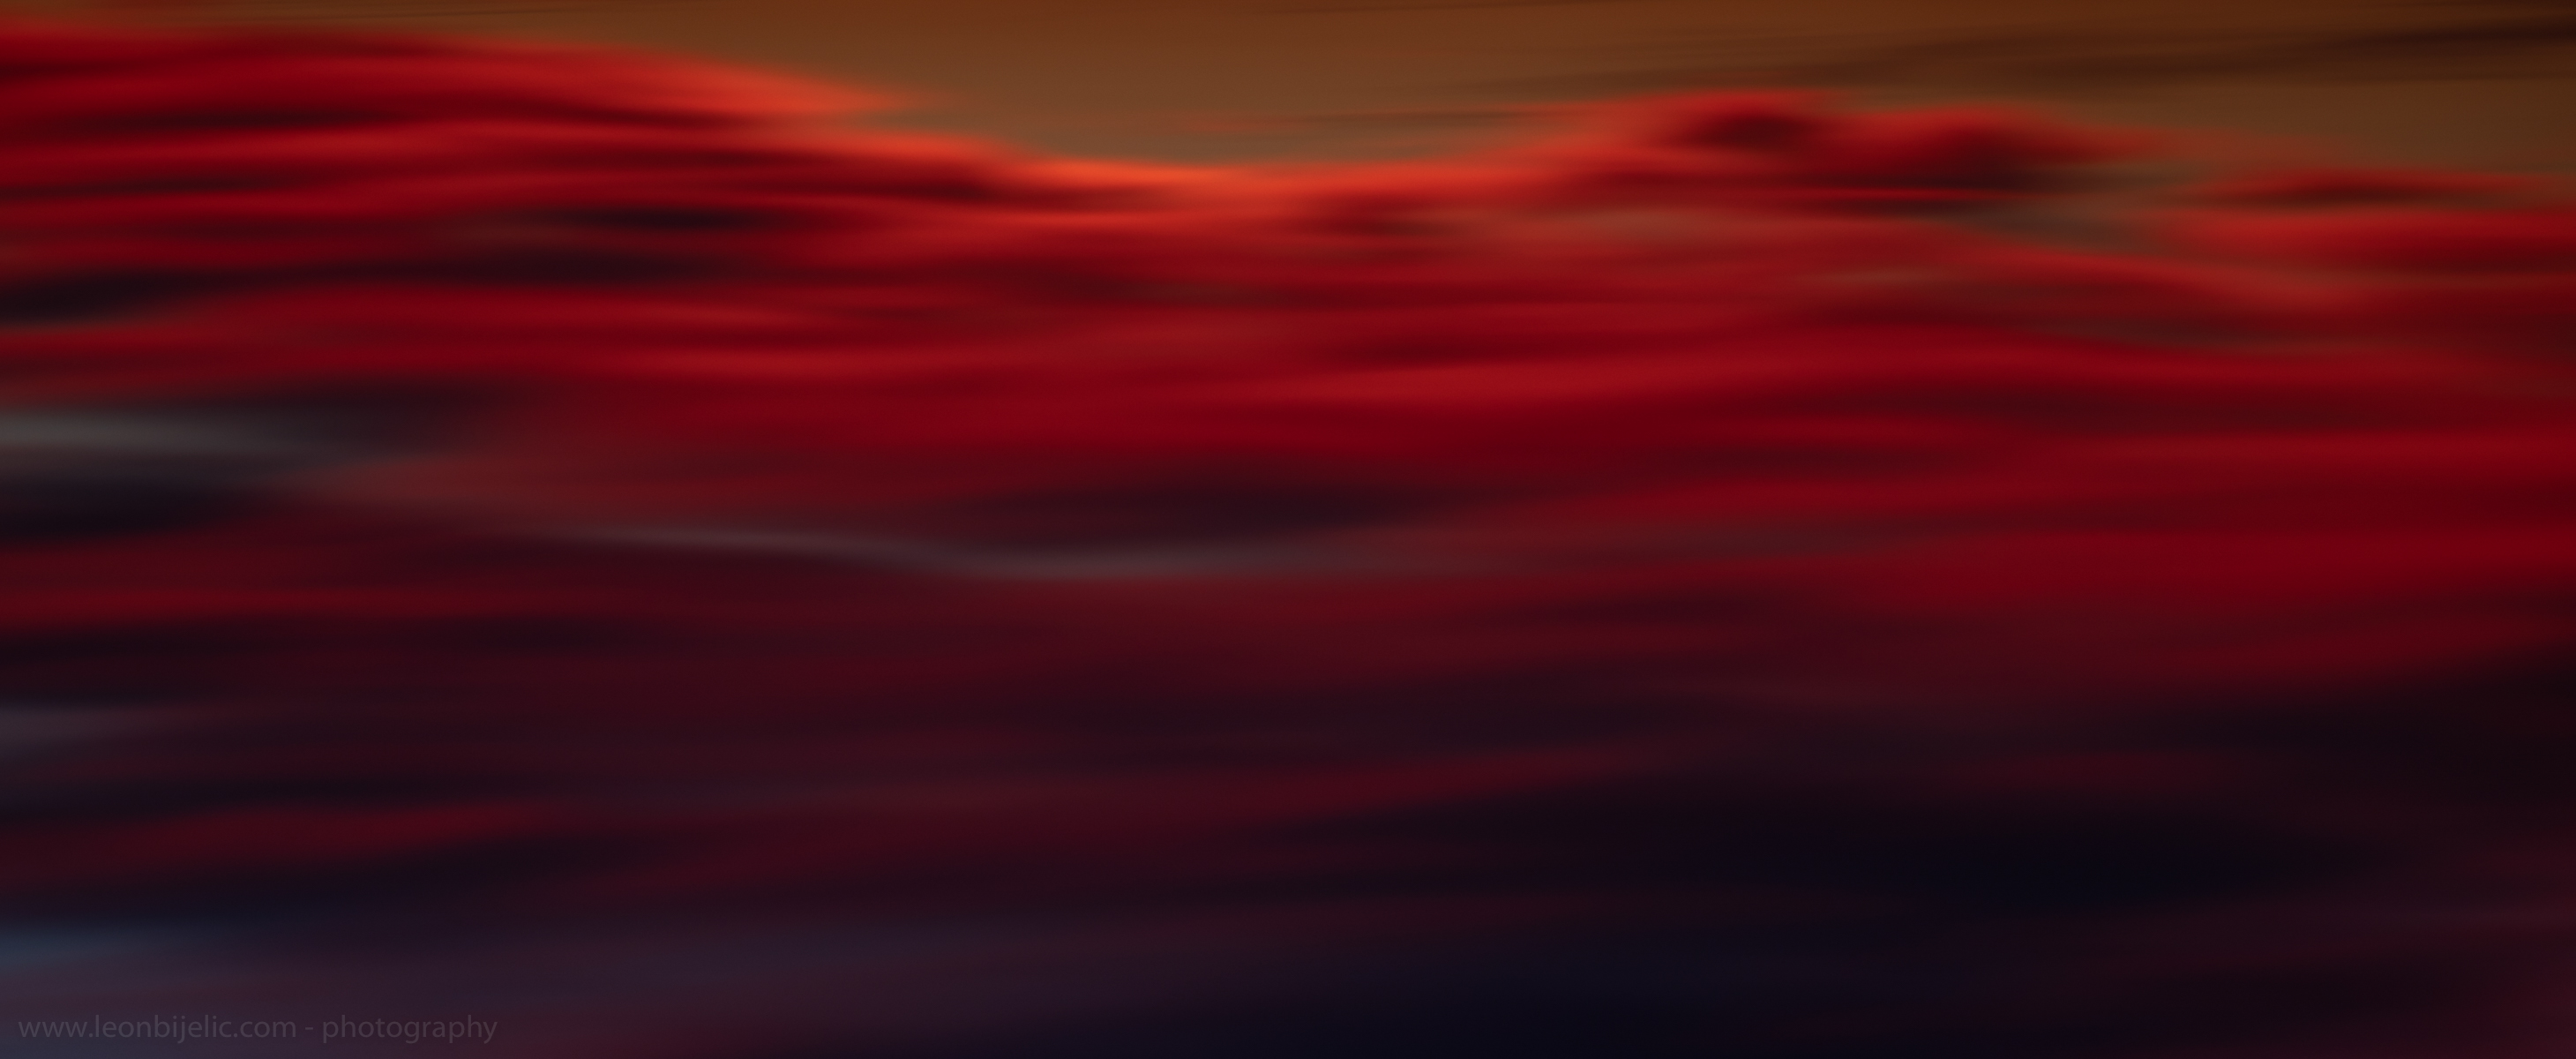 RED SUNSET COLOR COLORS PHOTO PHOTOGRAPHY - ABSTRACT - LEON BIJELIC PHOTOGRAPHER - BEAUTIFUL AMAZING BLUE SKY SUNDOWN